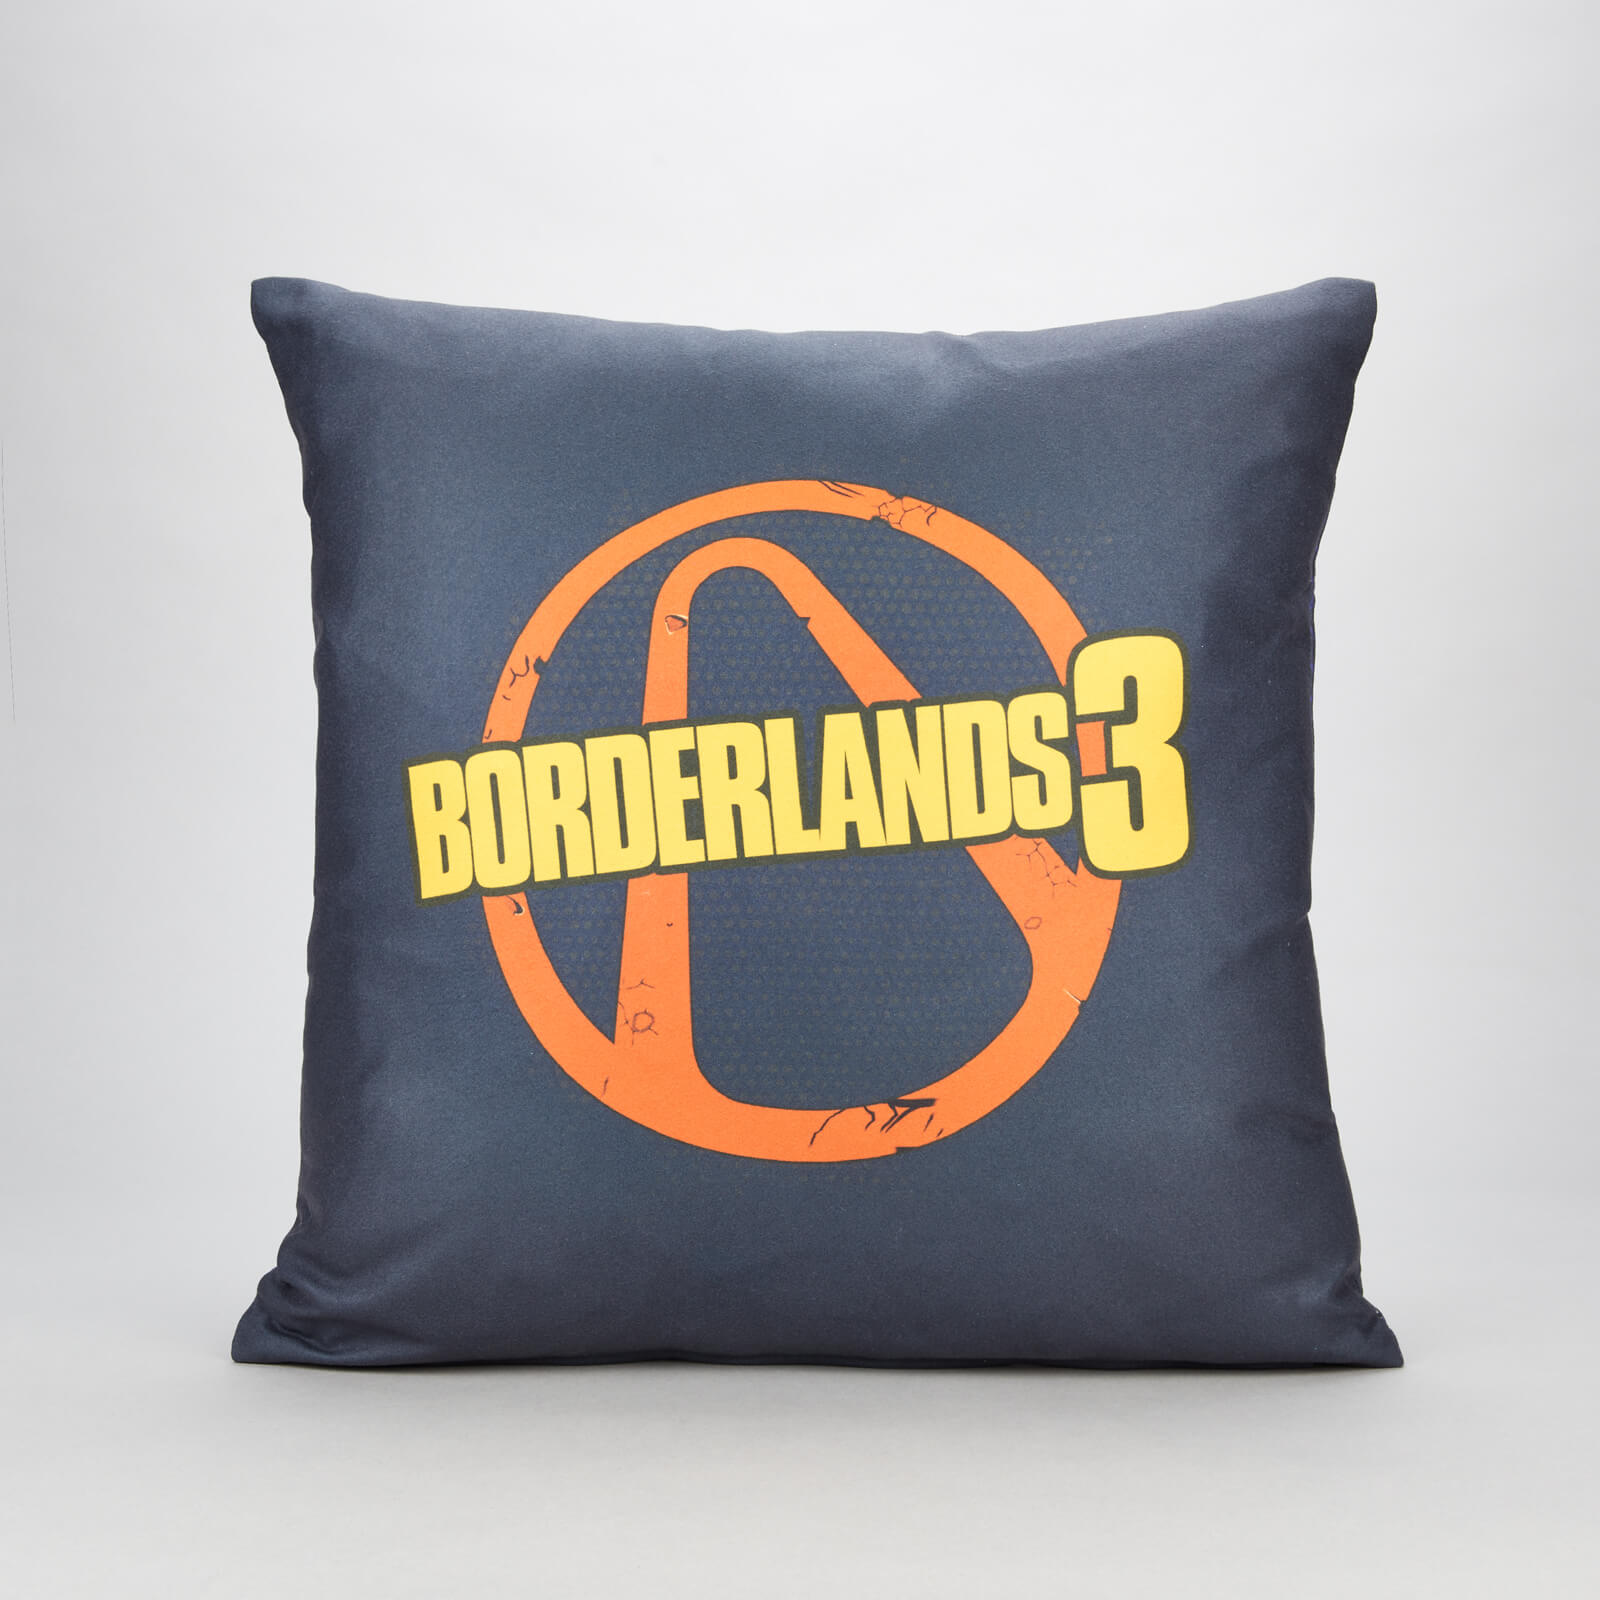 Borderlands 3 Square Cushion - 60x60cm - Soft Touch